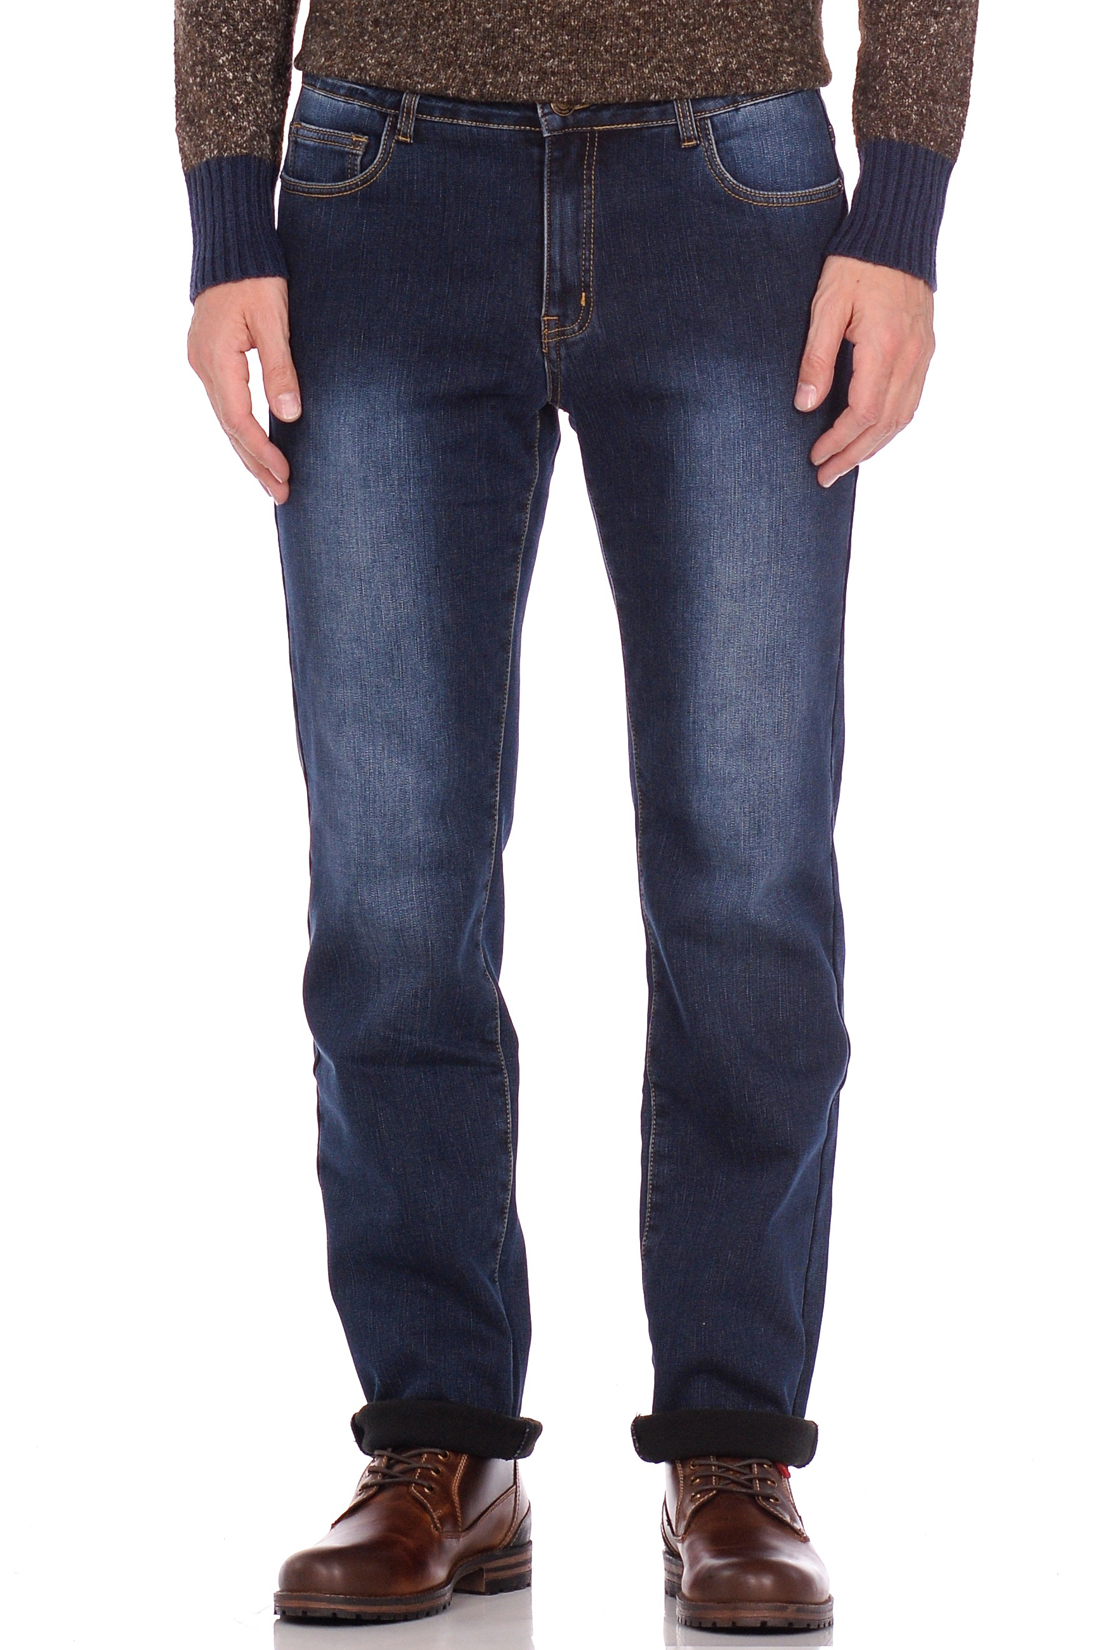 Утеплённые джинсы (арт. baon B808510), размер 42, цвет blue denim#голубой